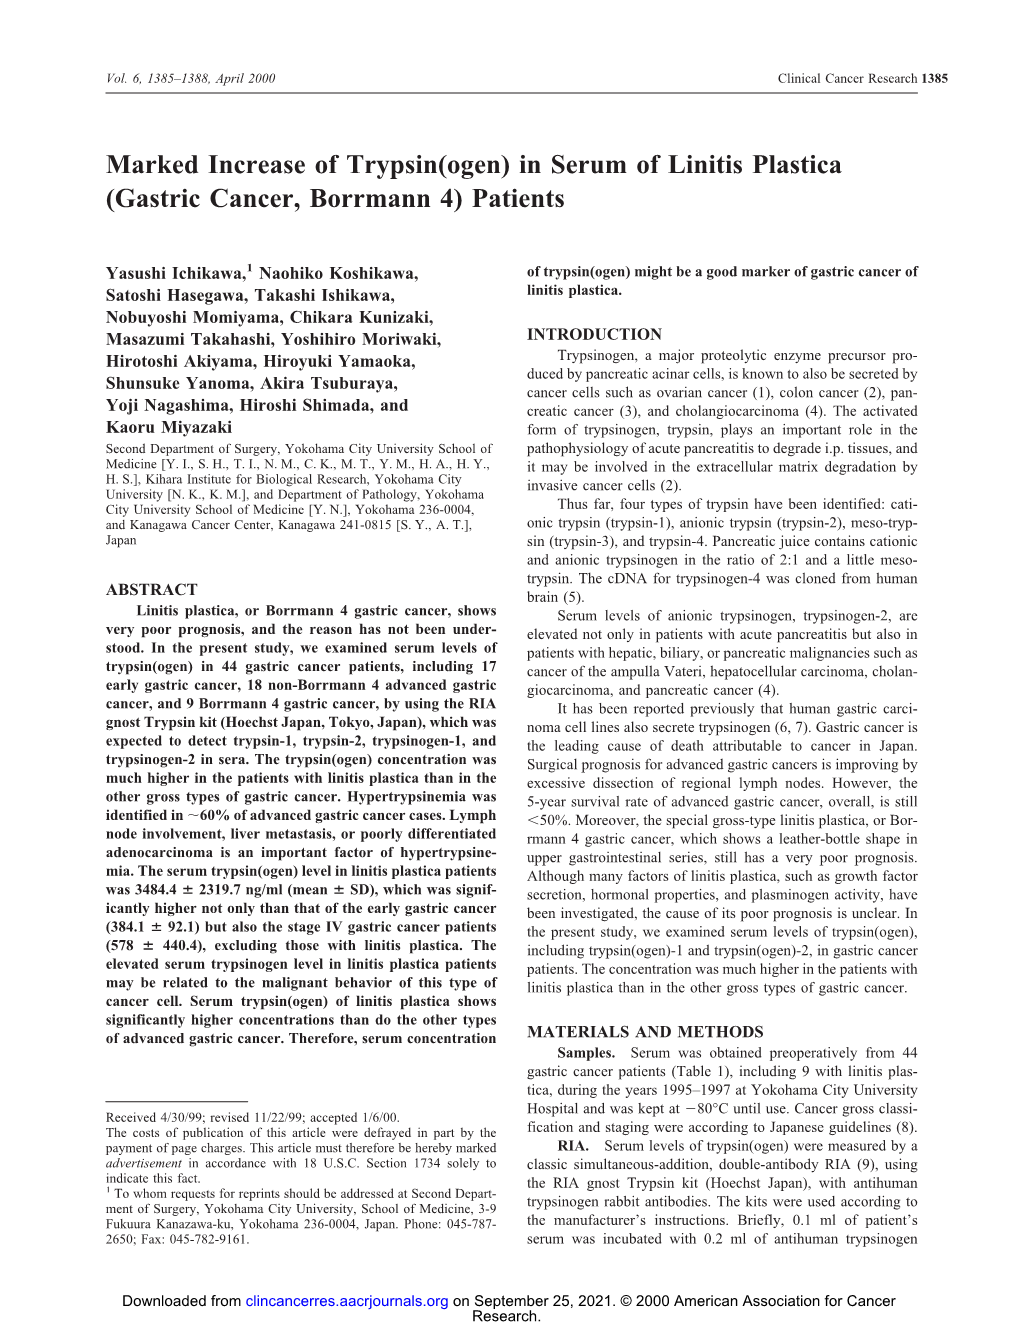 Marked Increase of Trypsin(Ogen) in Serum of Linitis Plastica (Gastric Cancer, Borrmann 4) Patients